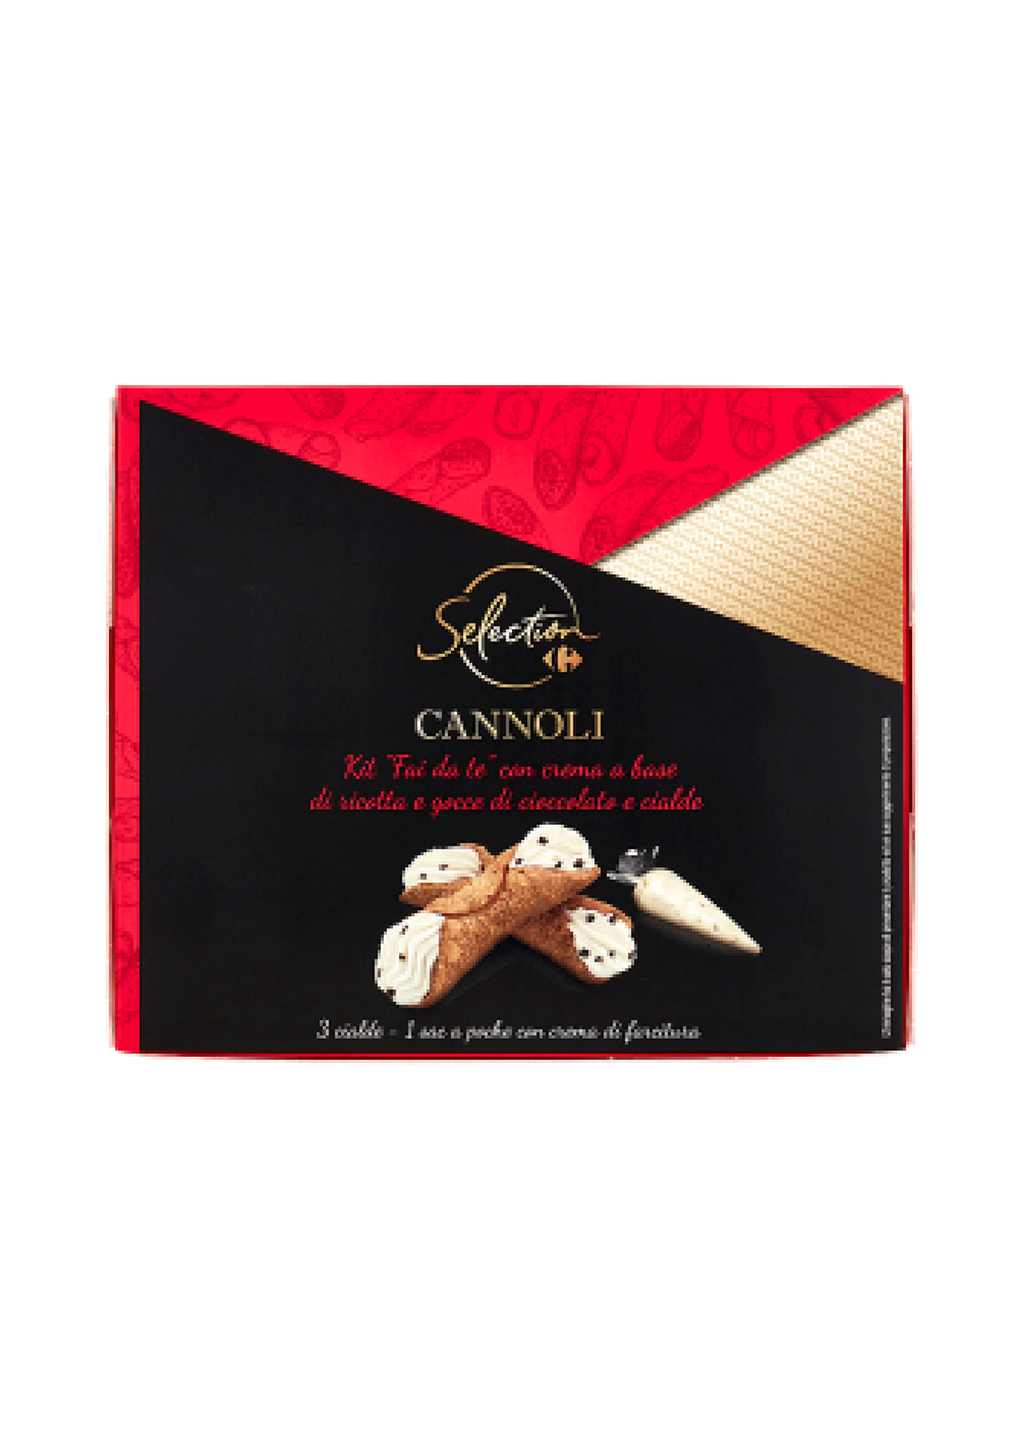 Cannoli Carrefour Selection